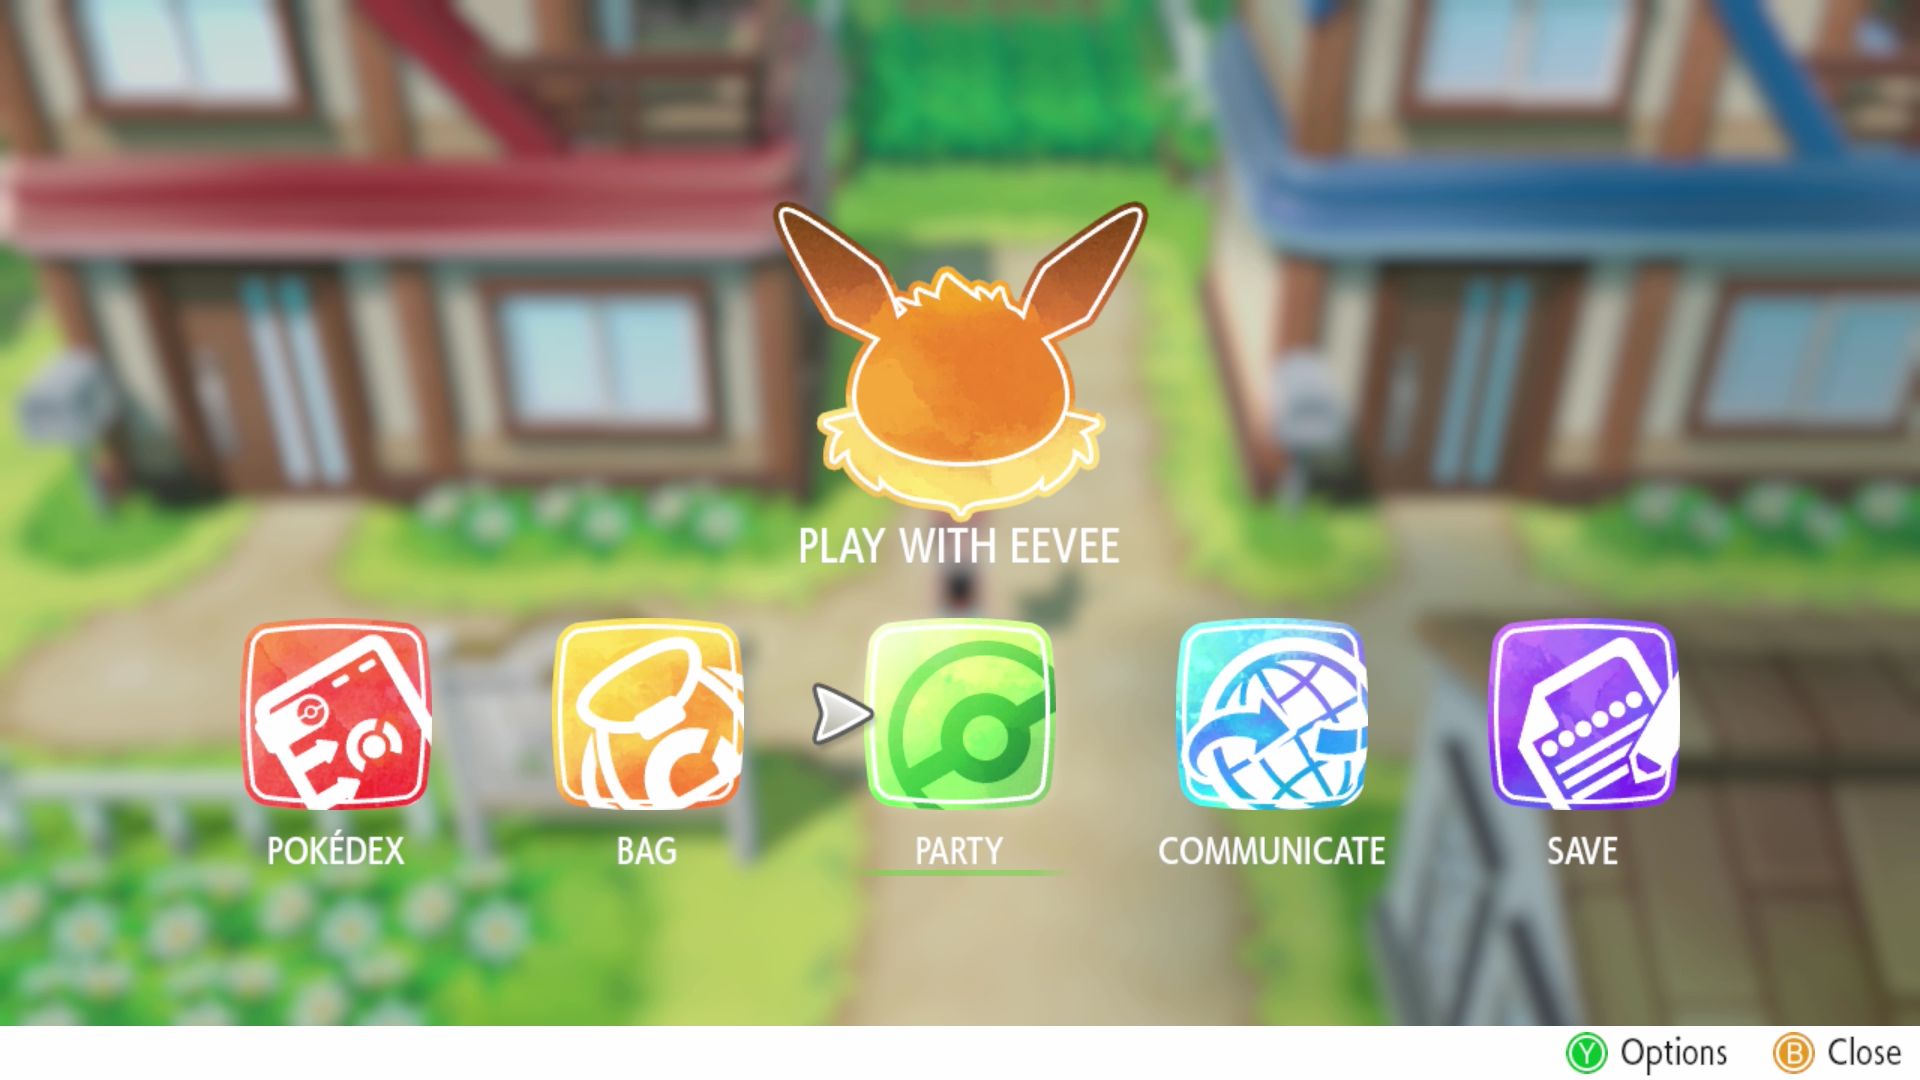 Pokémon Lets Go Pikachu And Pokémon Lets Go Eevee